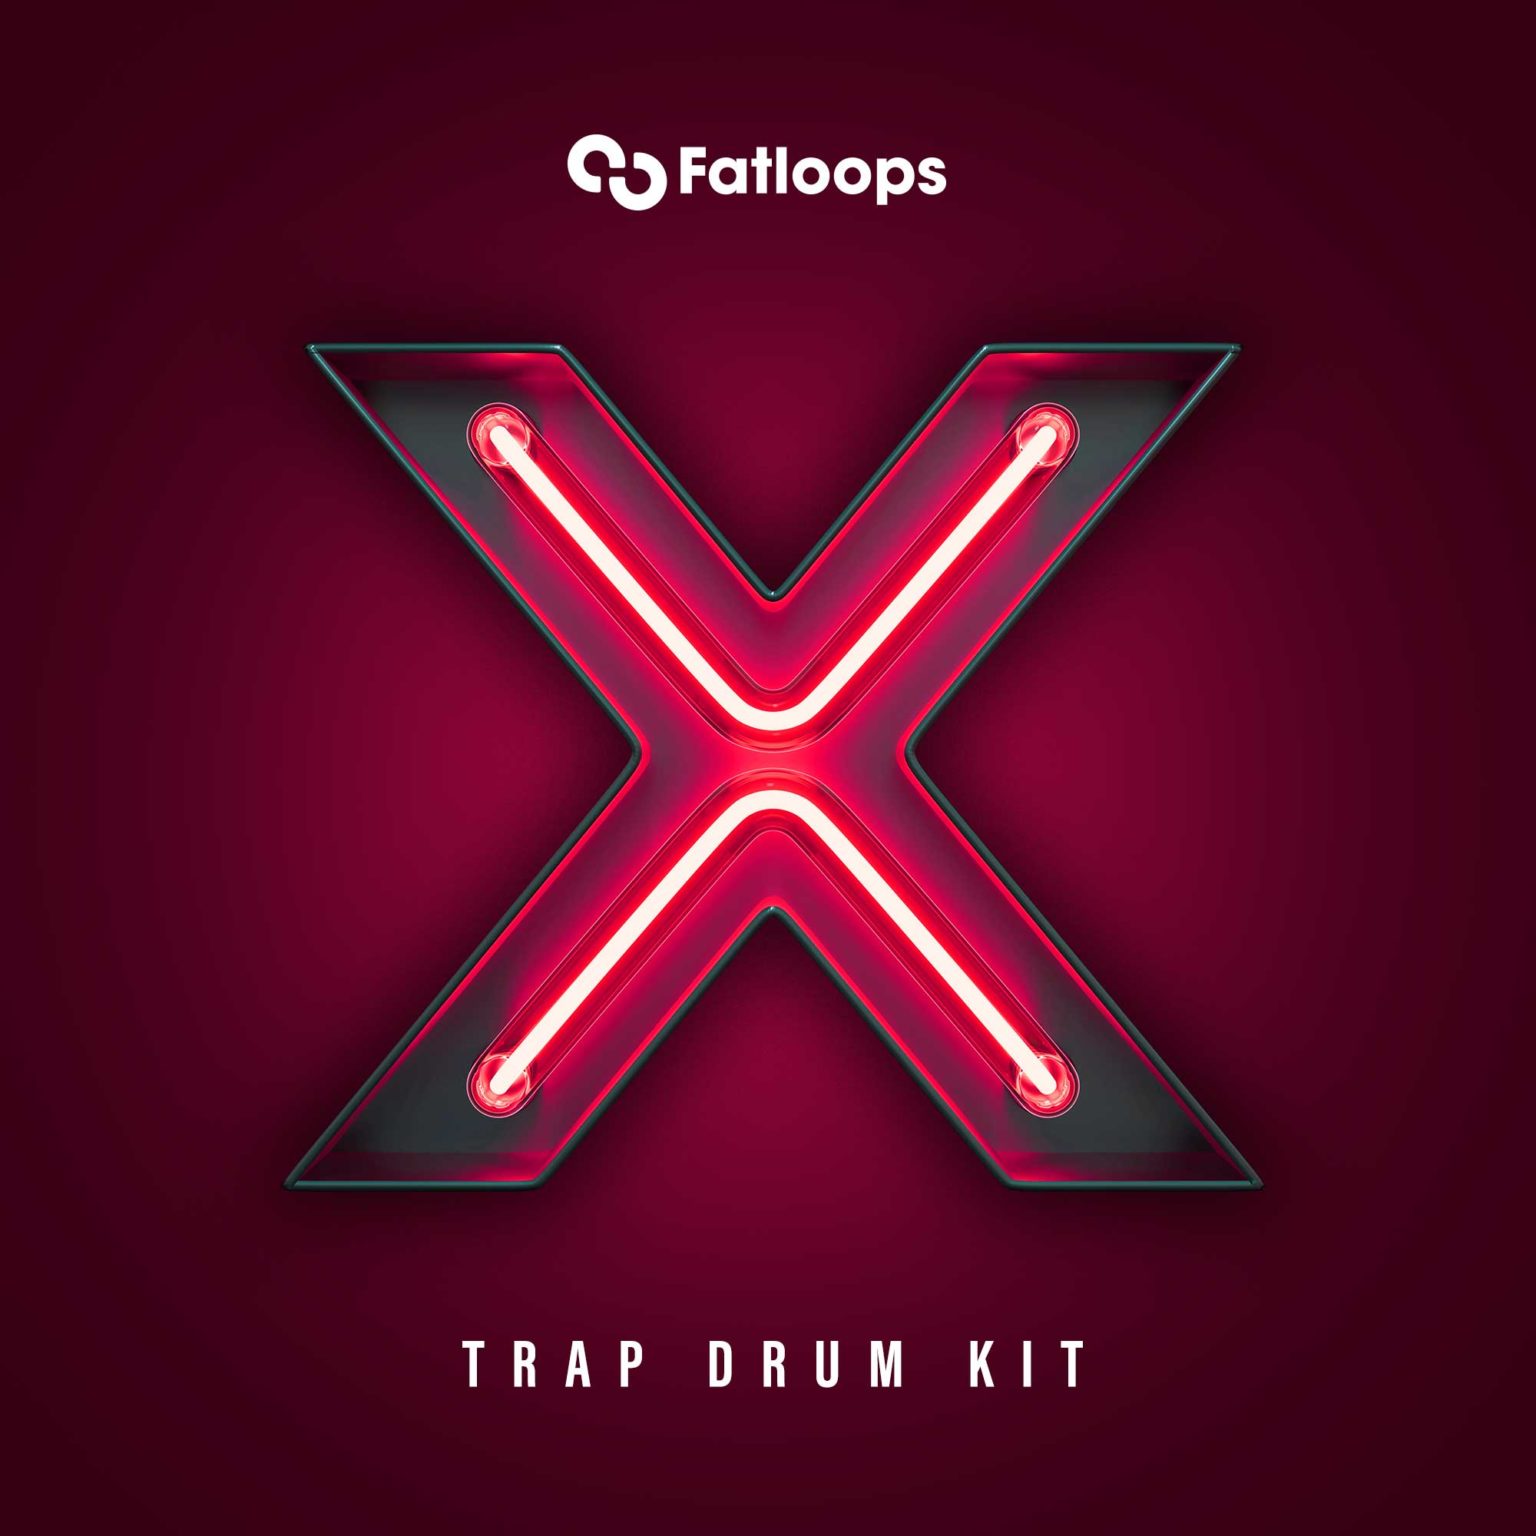 free memphis trap drum kits reddit